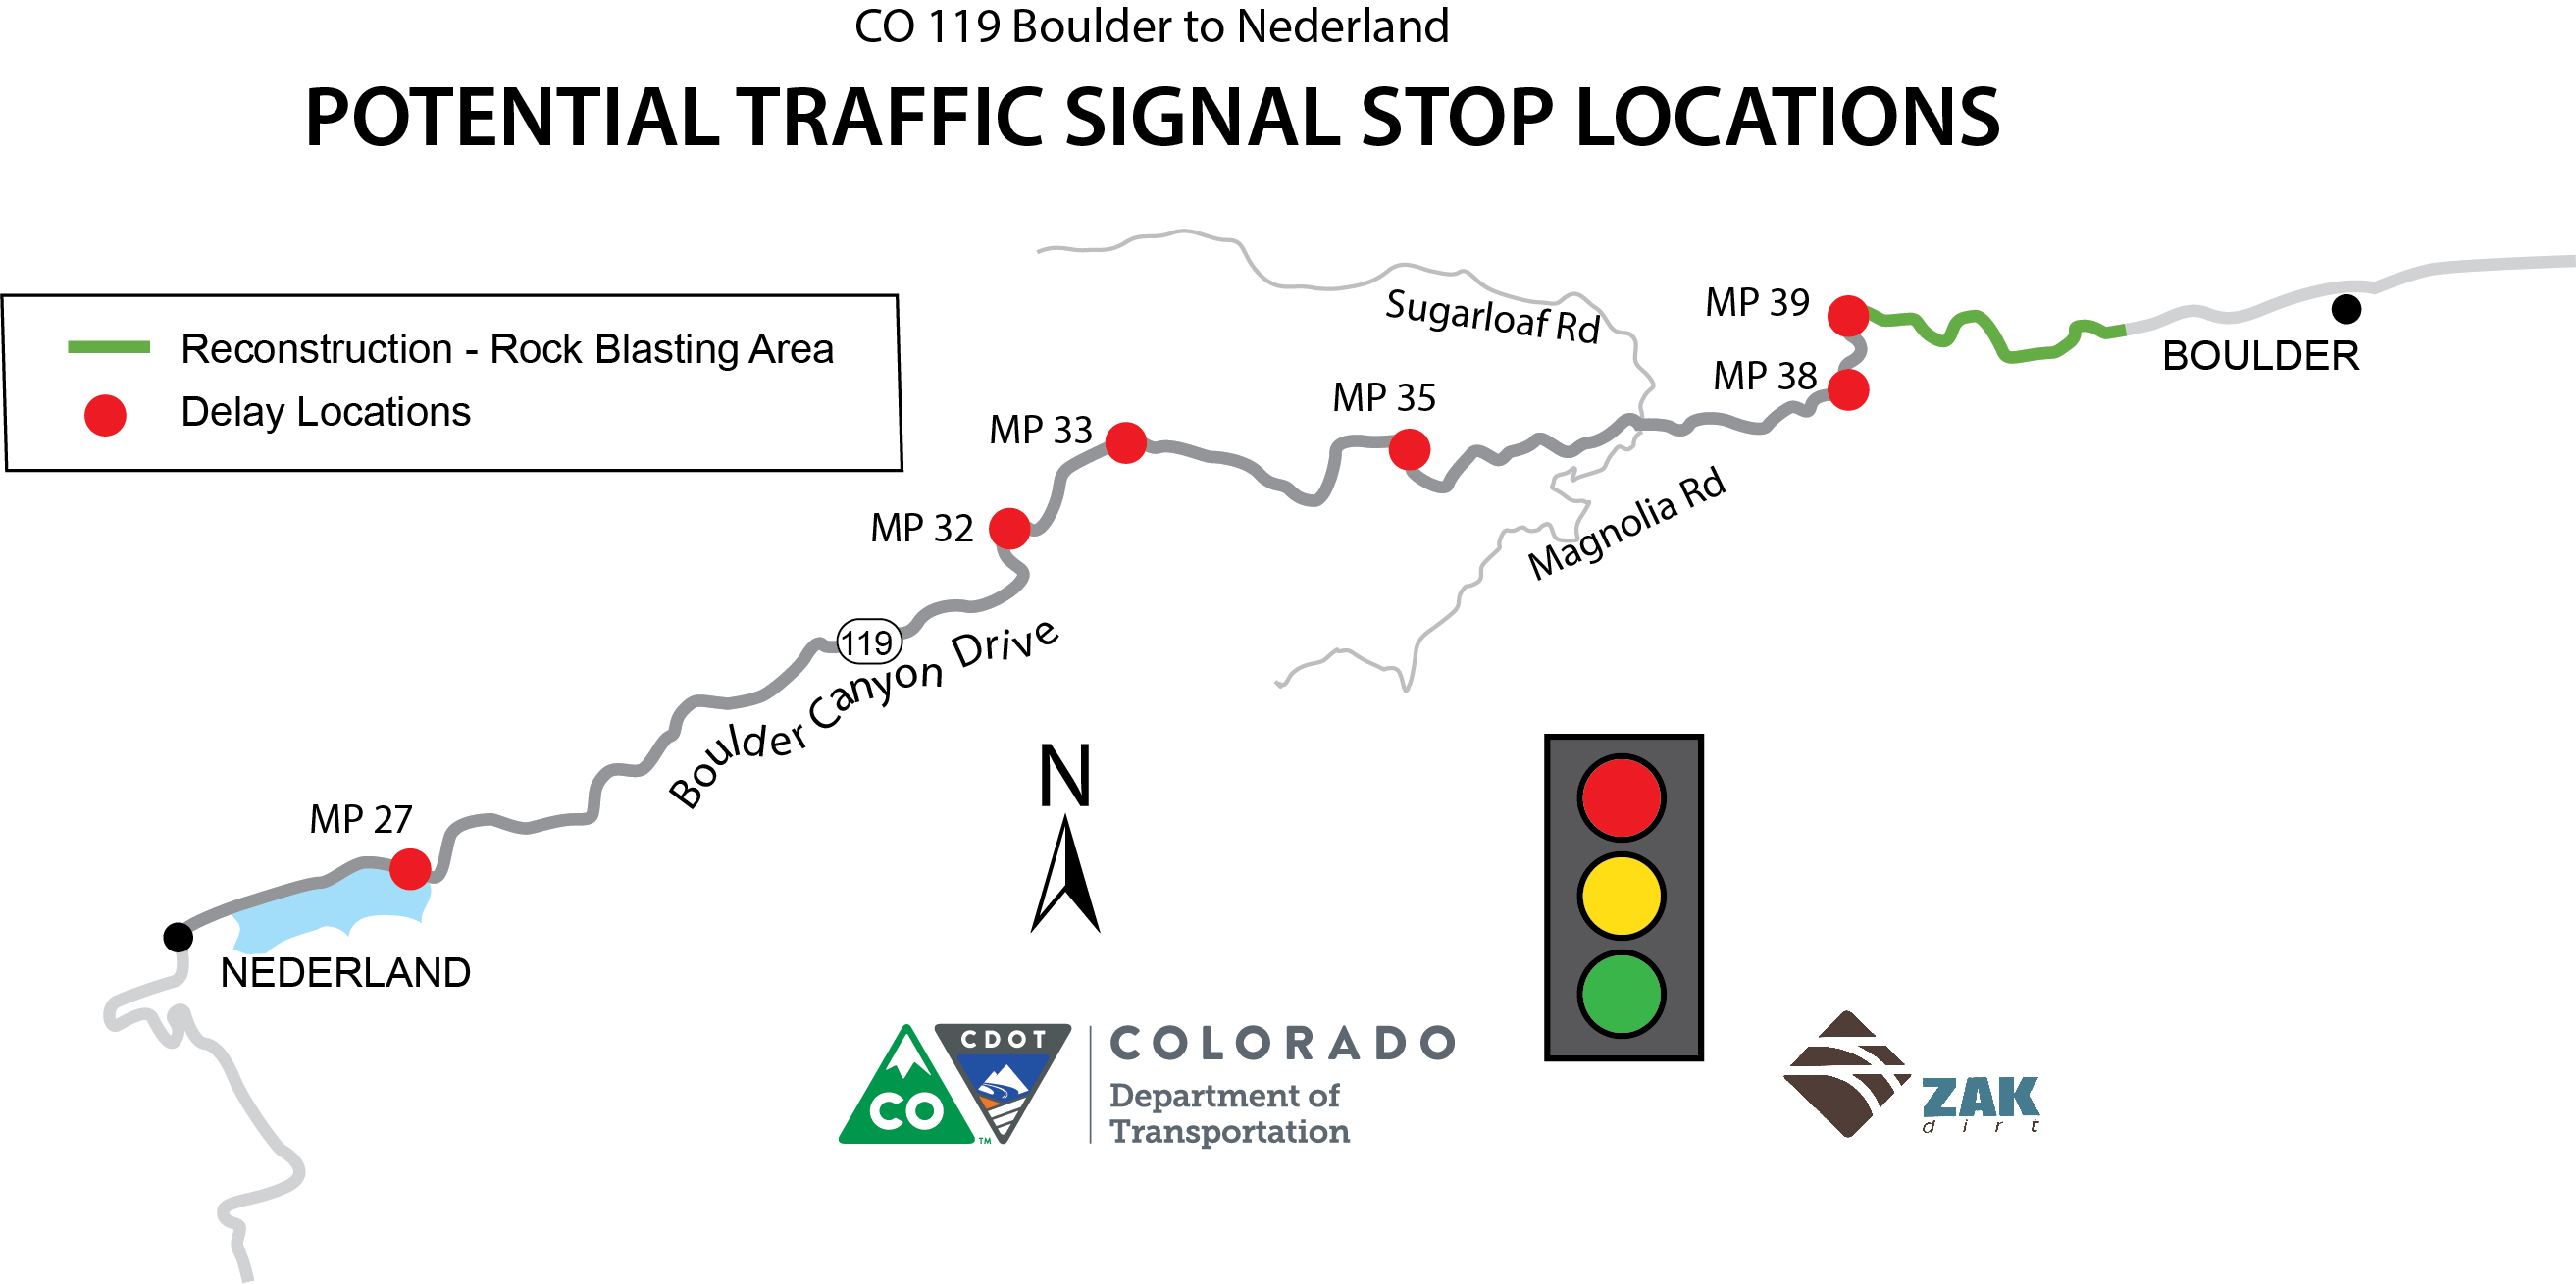 CO119 traffic signal stops.jpg detail image